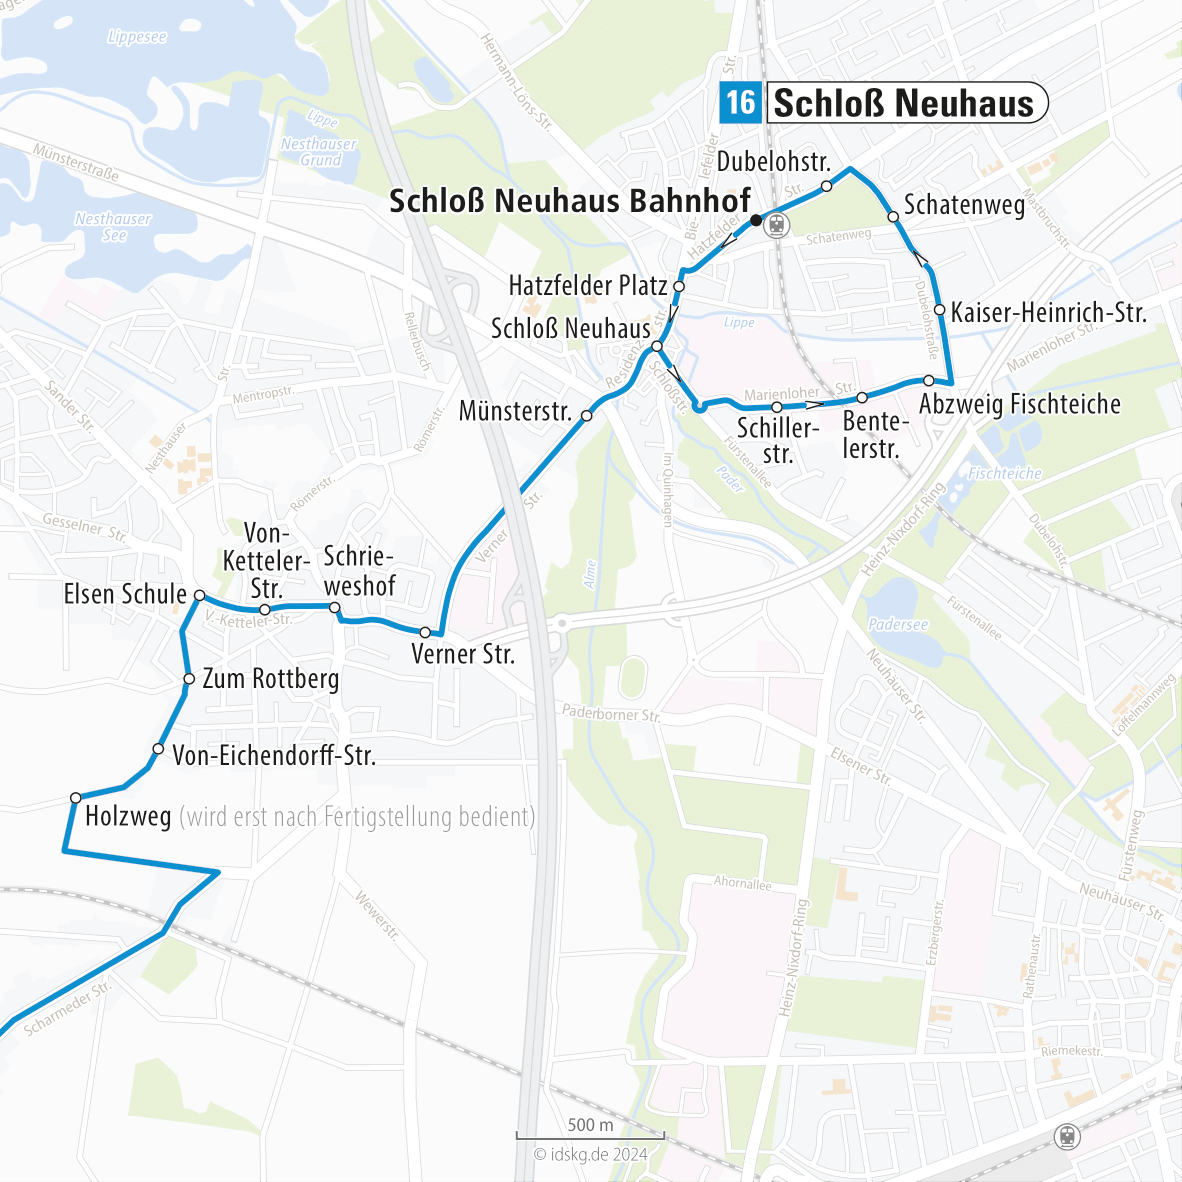 Kartenausschnitt der Linie 16 Scharmede bis Schloss Neuhaus 15x15